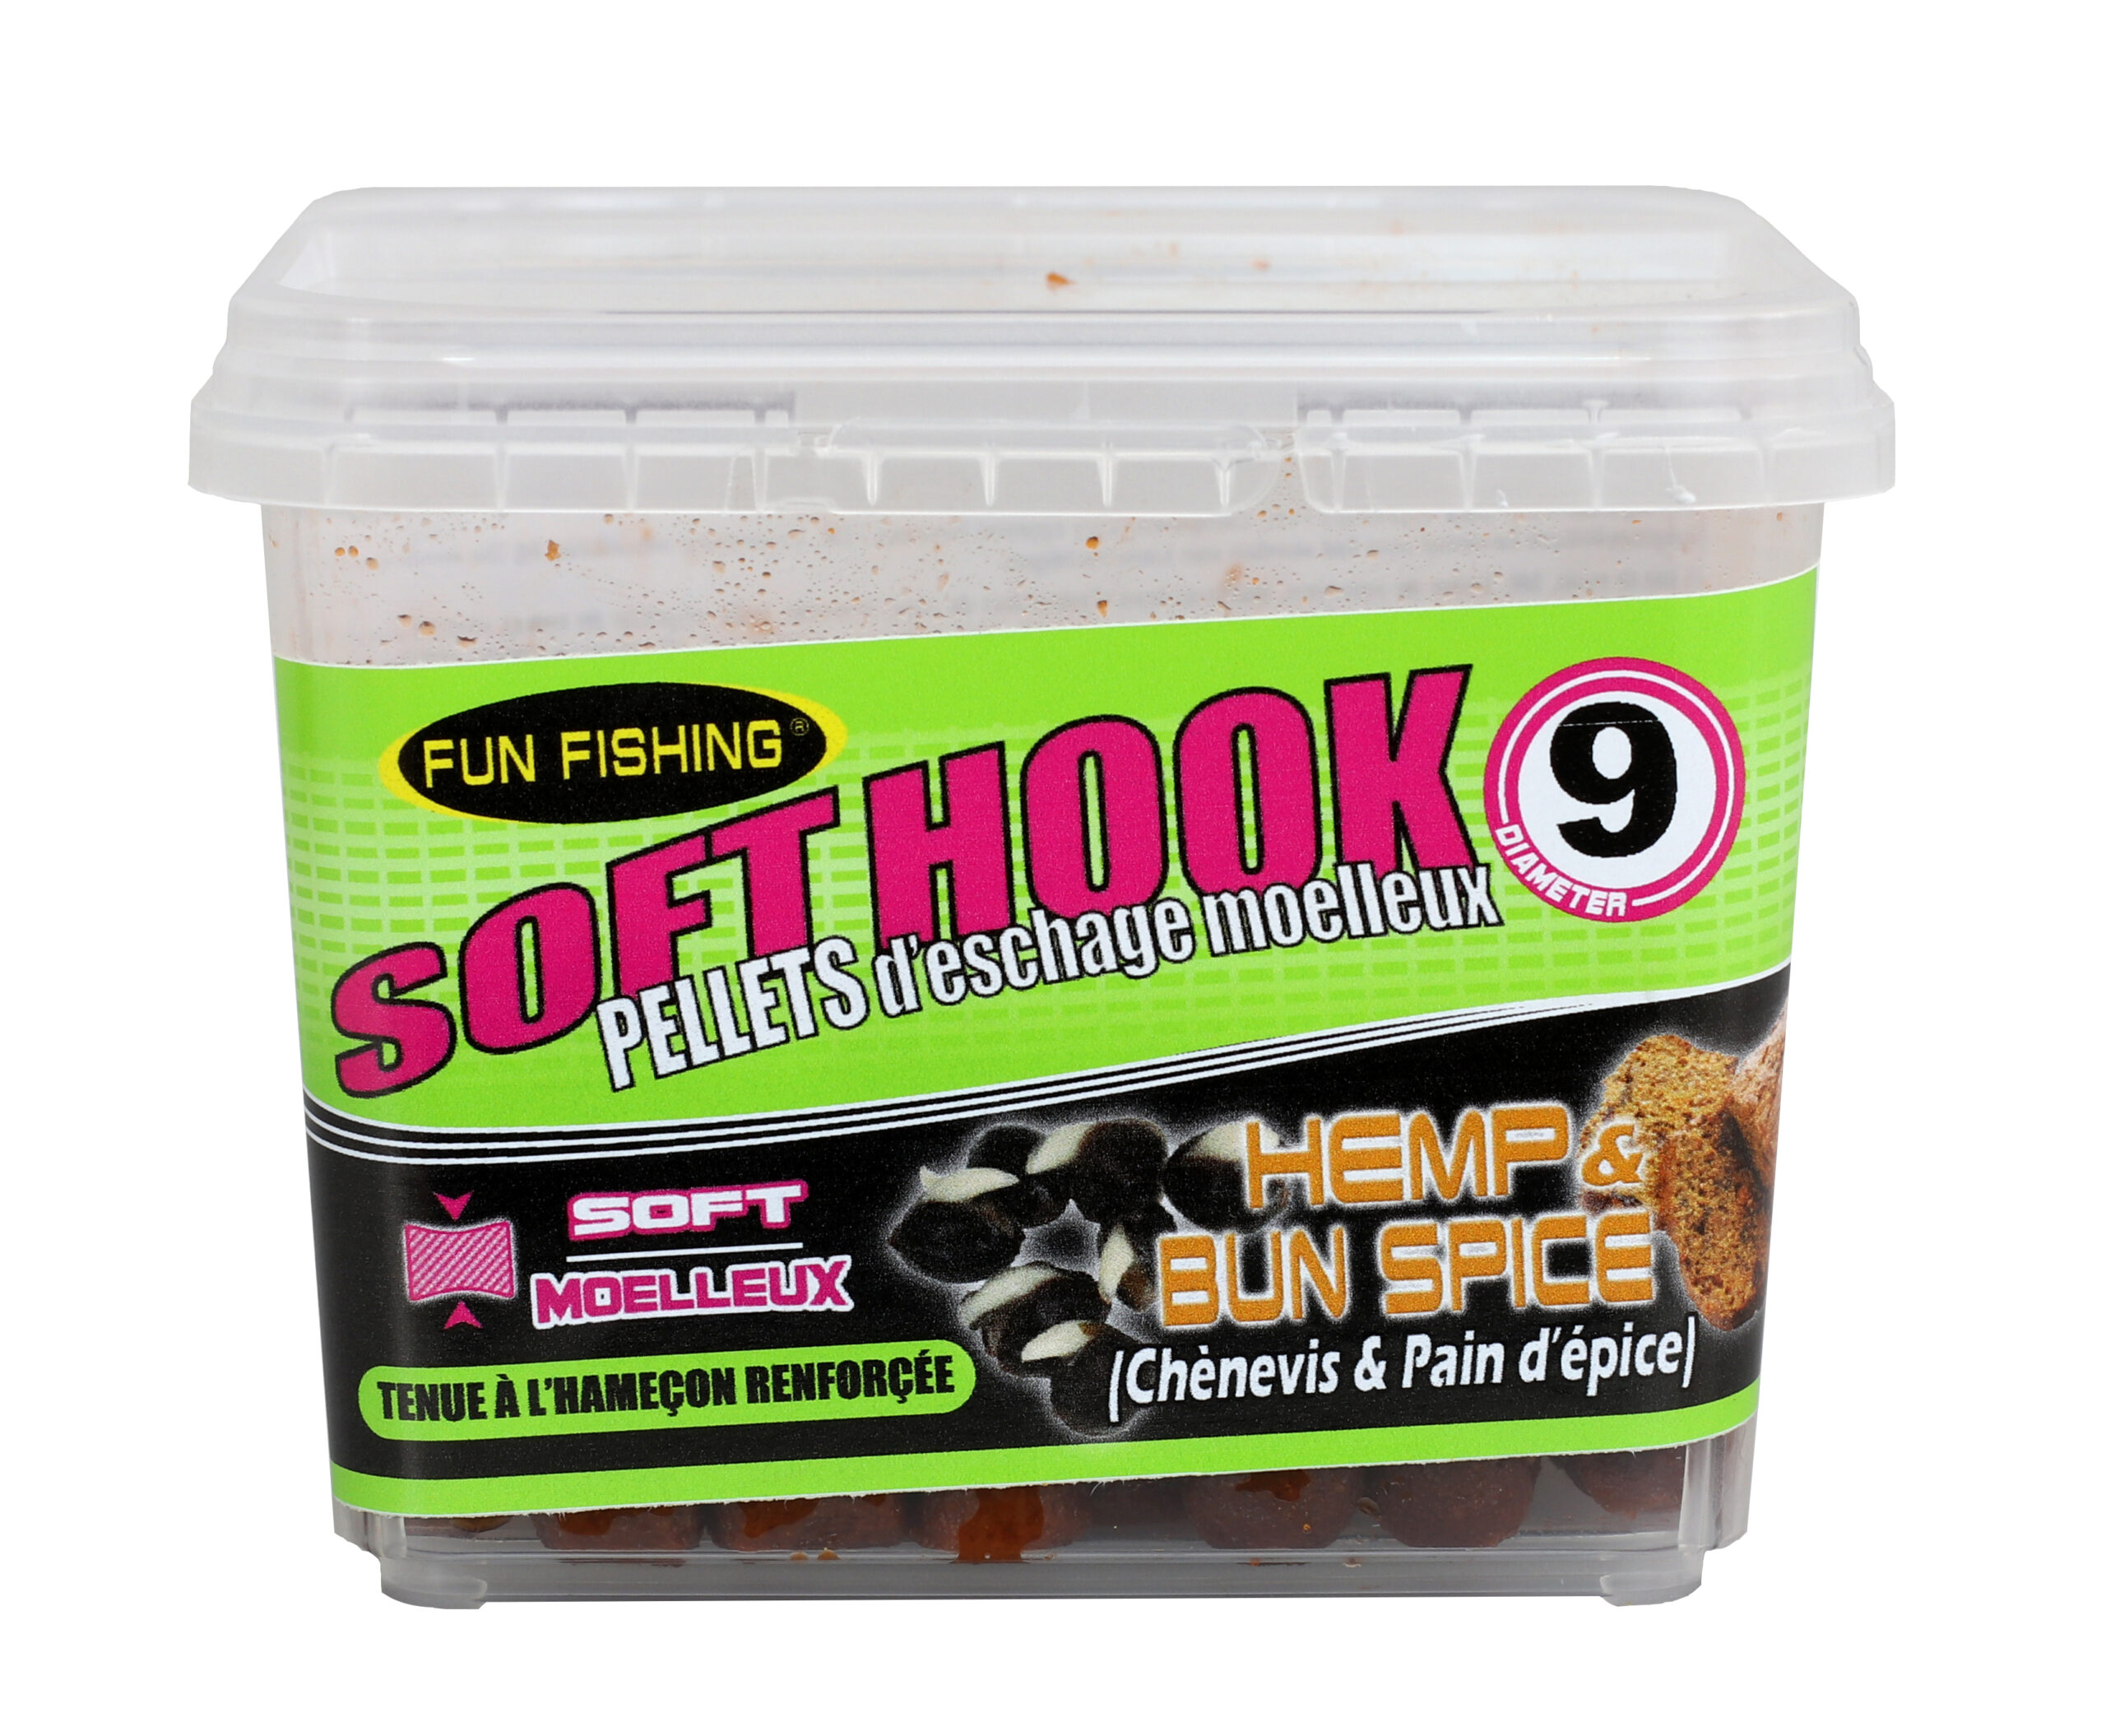 Soft hook pellets 9 mm – Hemp and Bunspice – Hengelsport De Poemper